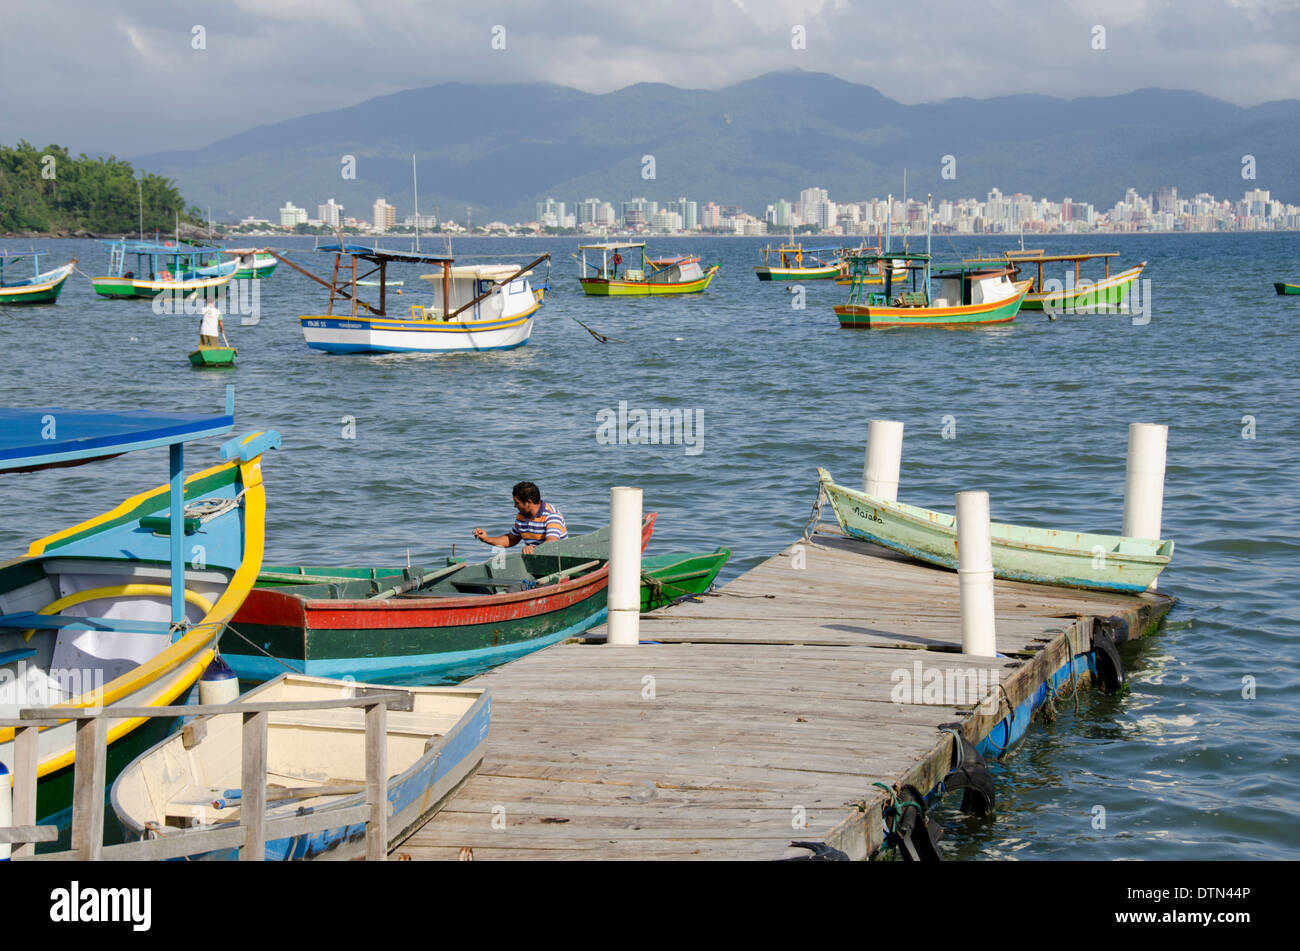 Brazil, Santa Catarina, Porto Belo. Colorful local fishing boats with city skyline in distance. Stock Photo